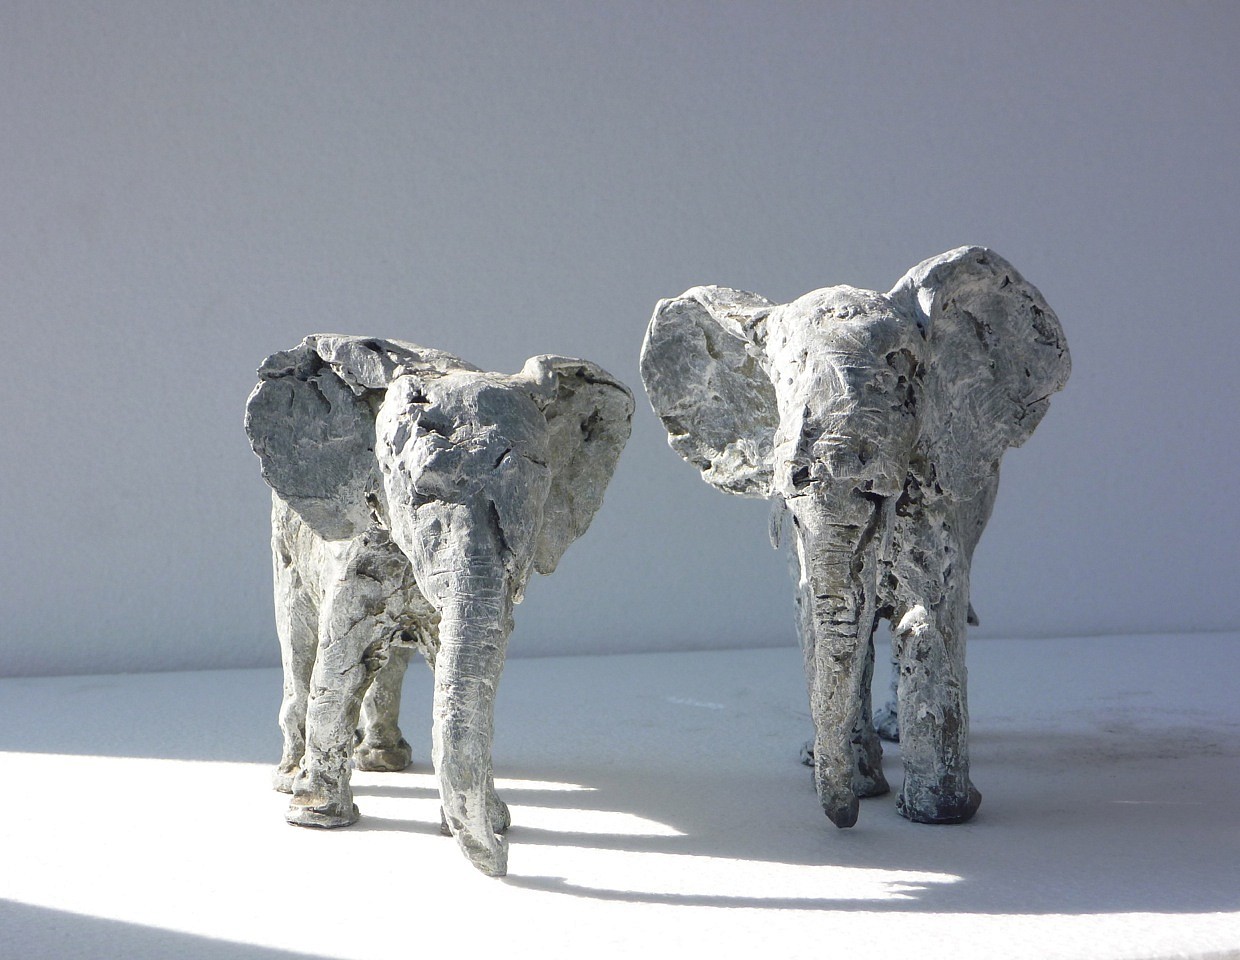 Heather Jansch, Baby Elephants, Child 2, 2015
6 x 4 1/2 x 3 1/2 in.